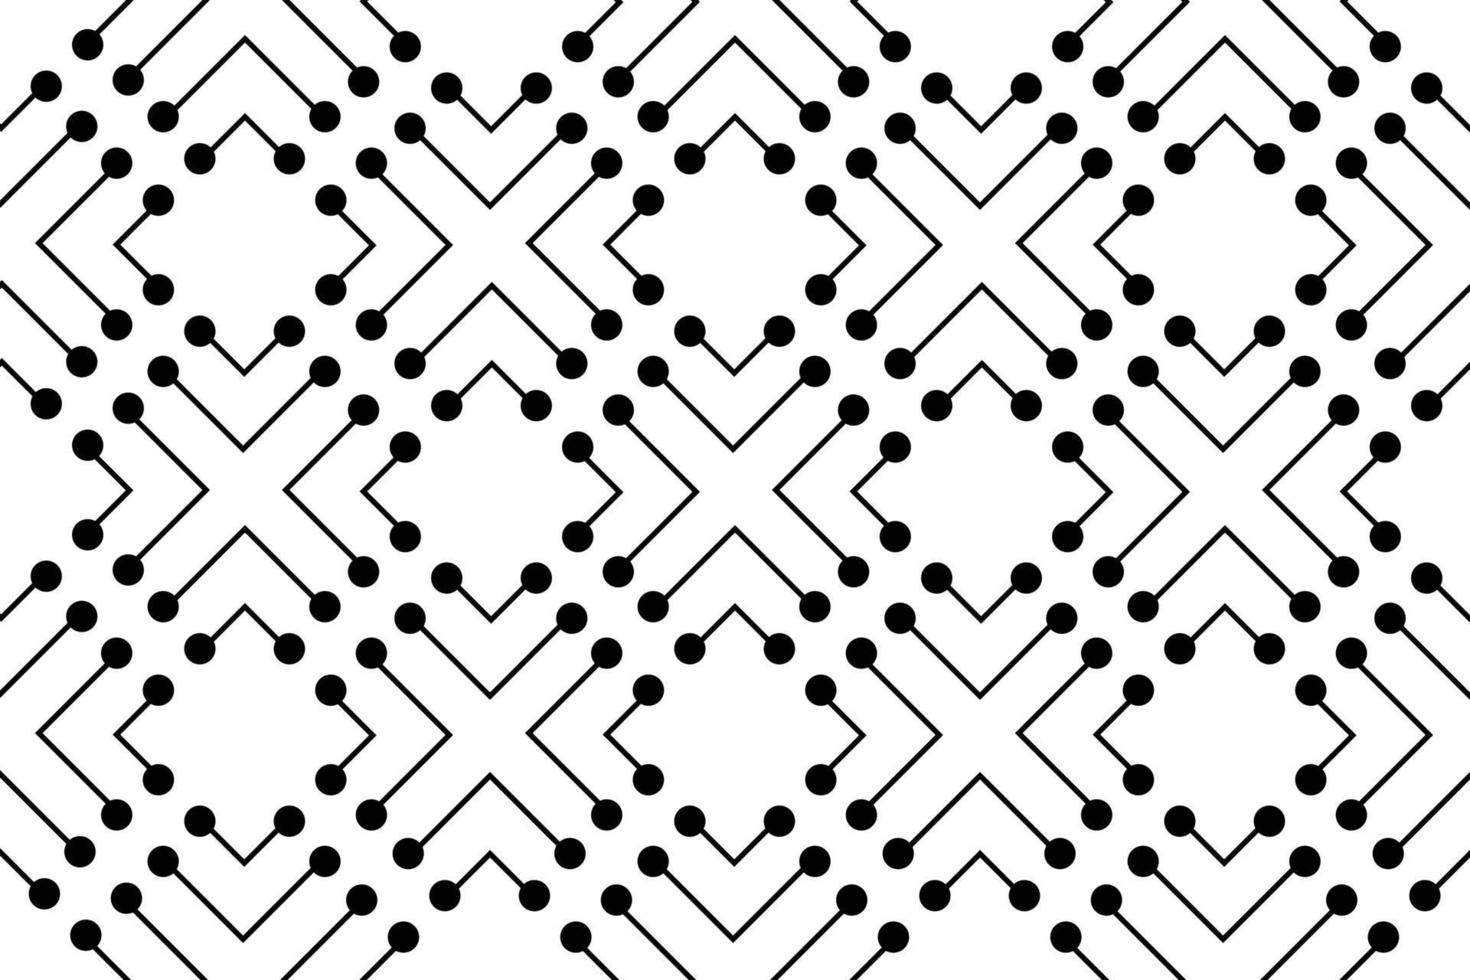 Abstract Pattern polka dots vector illustration